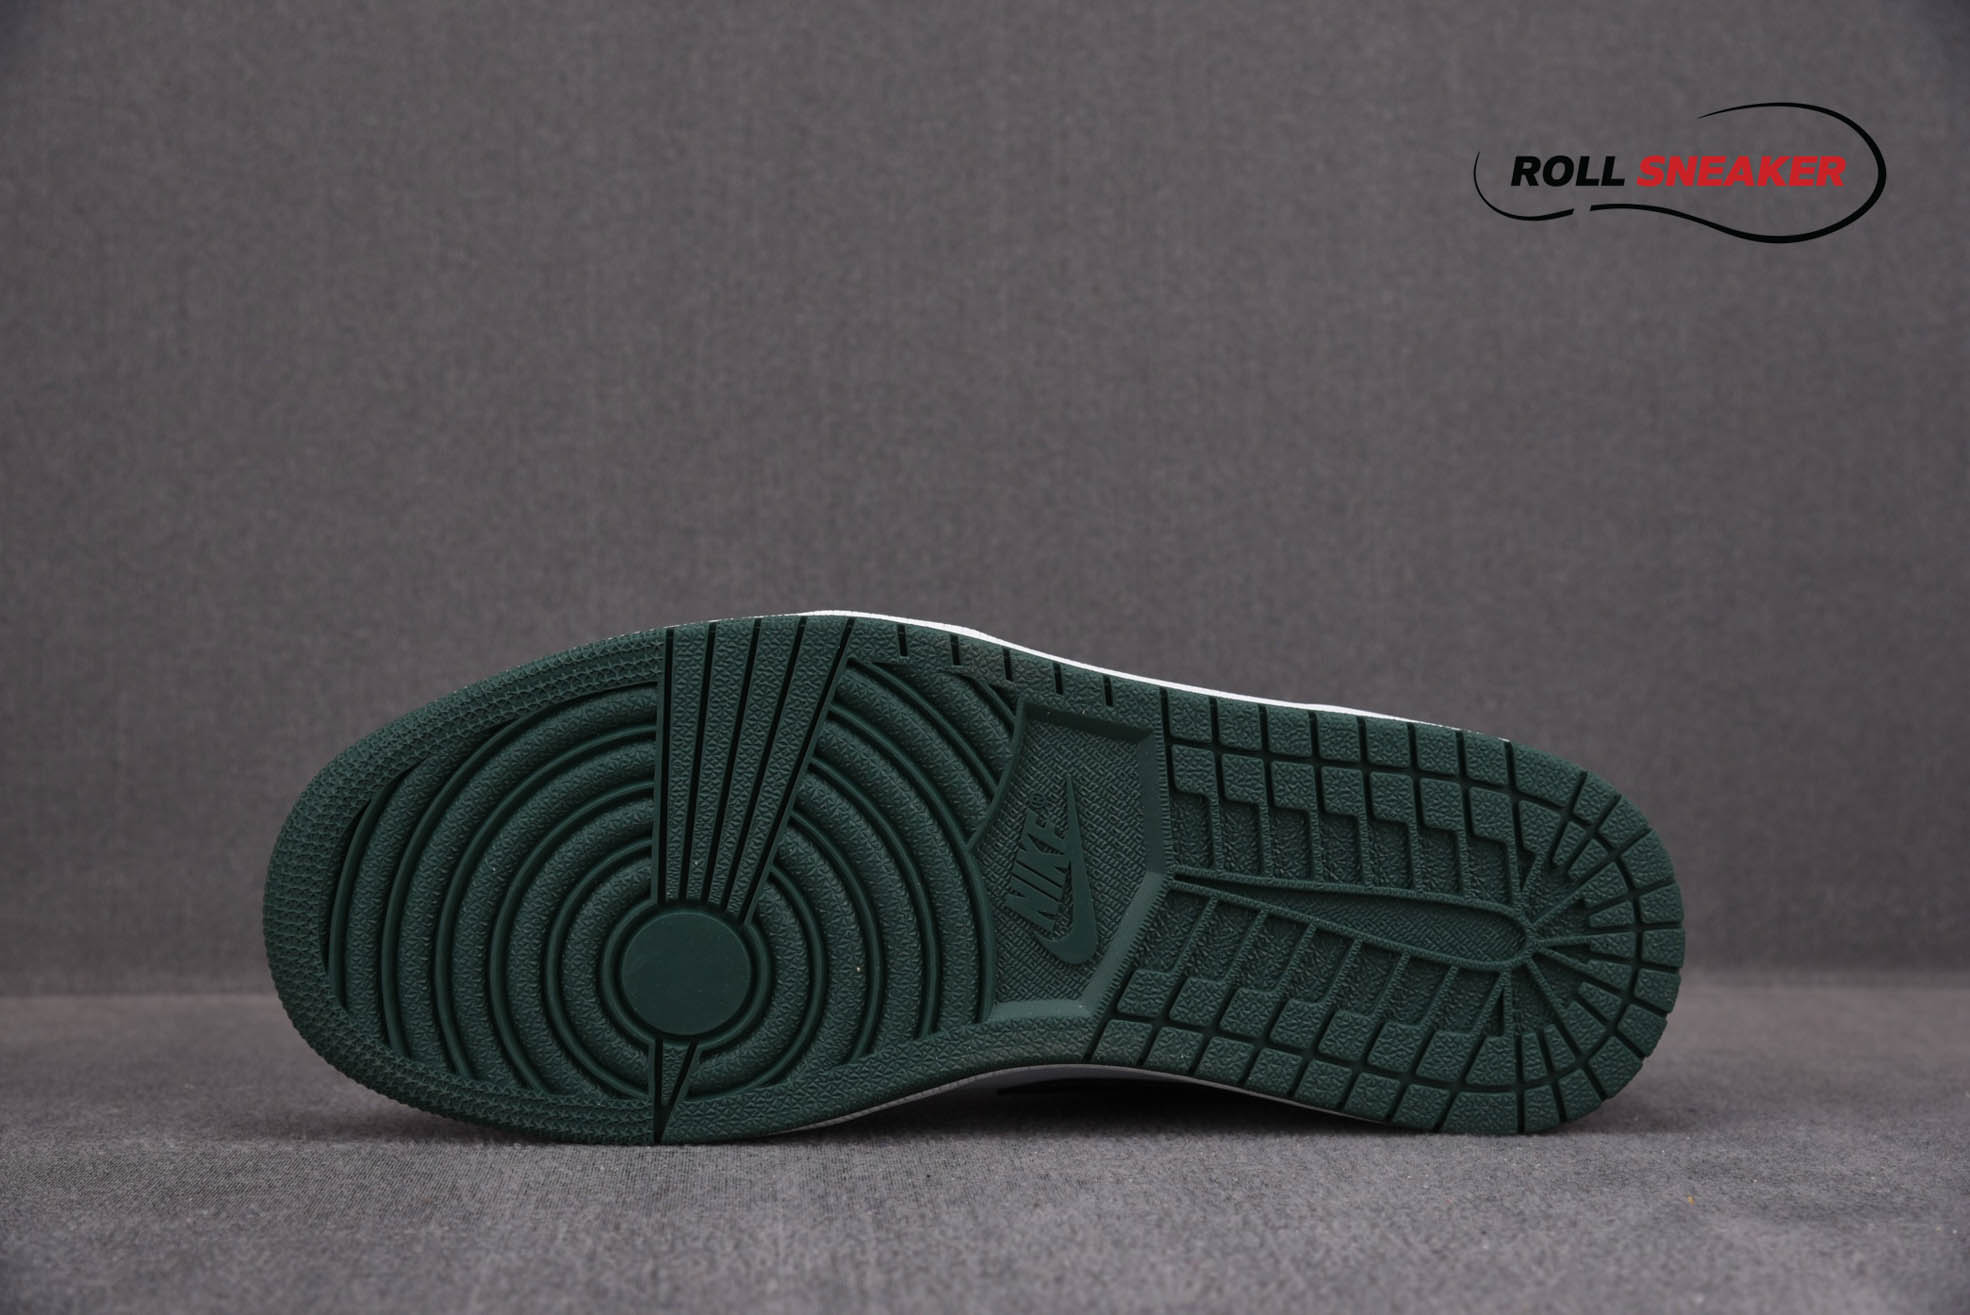 Nike Air Jordan 1 Low GS ‘Green Toe’
